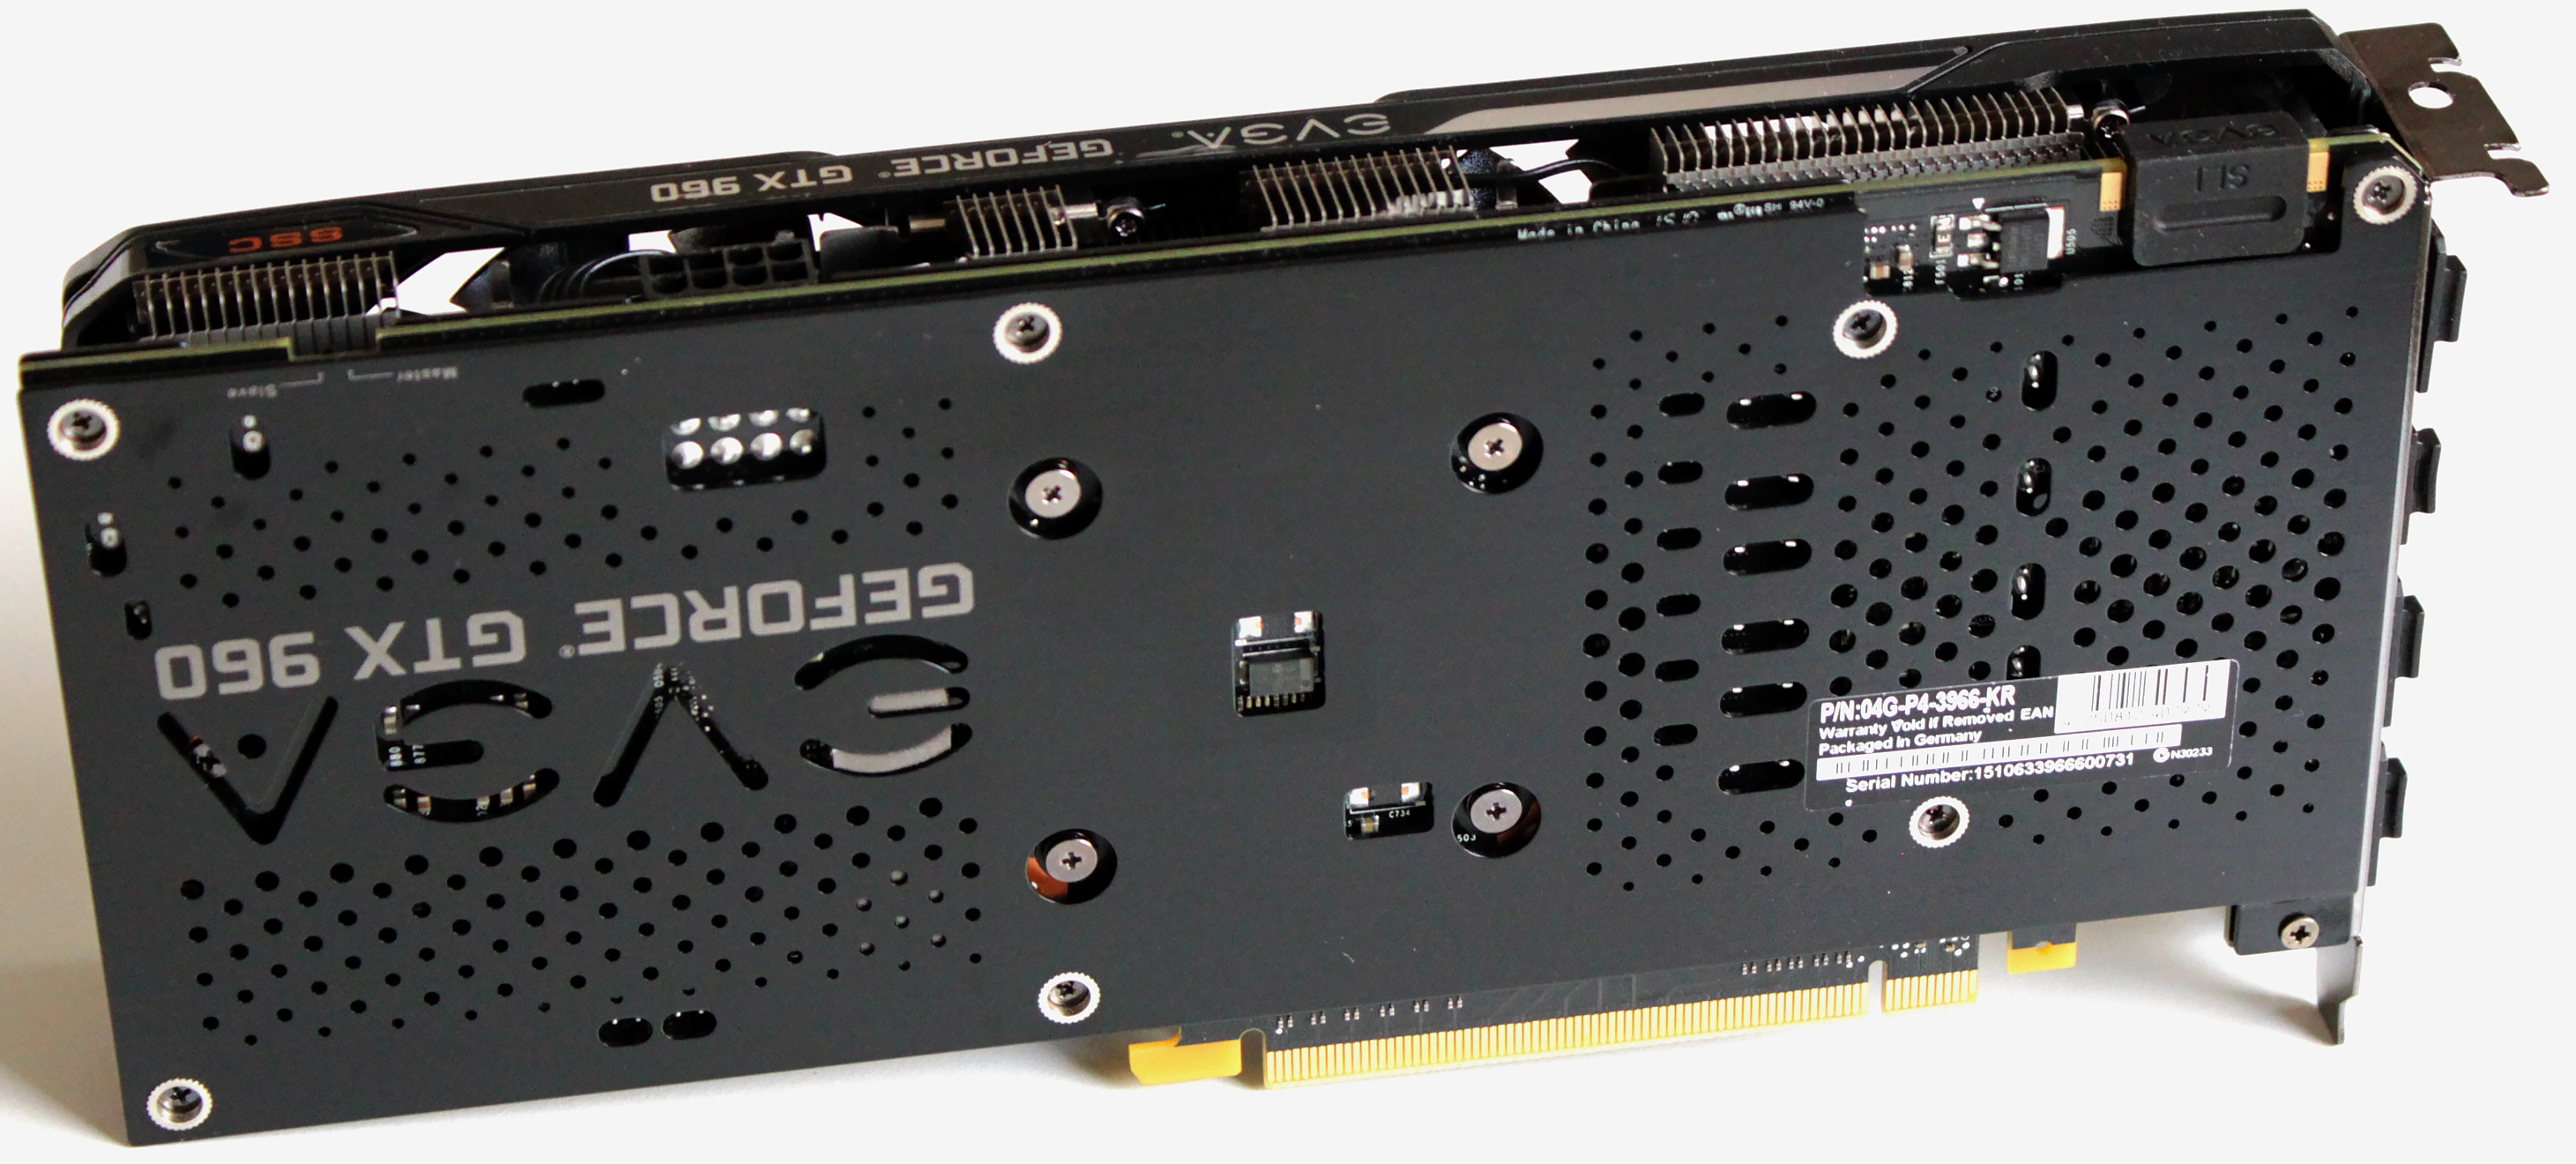 Evga Geforce Gtx 960 Supersc Acx 2 0 4gb Previewed